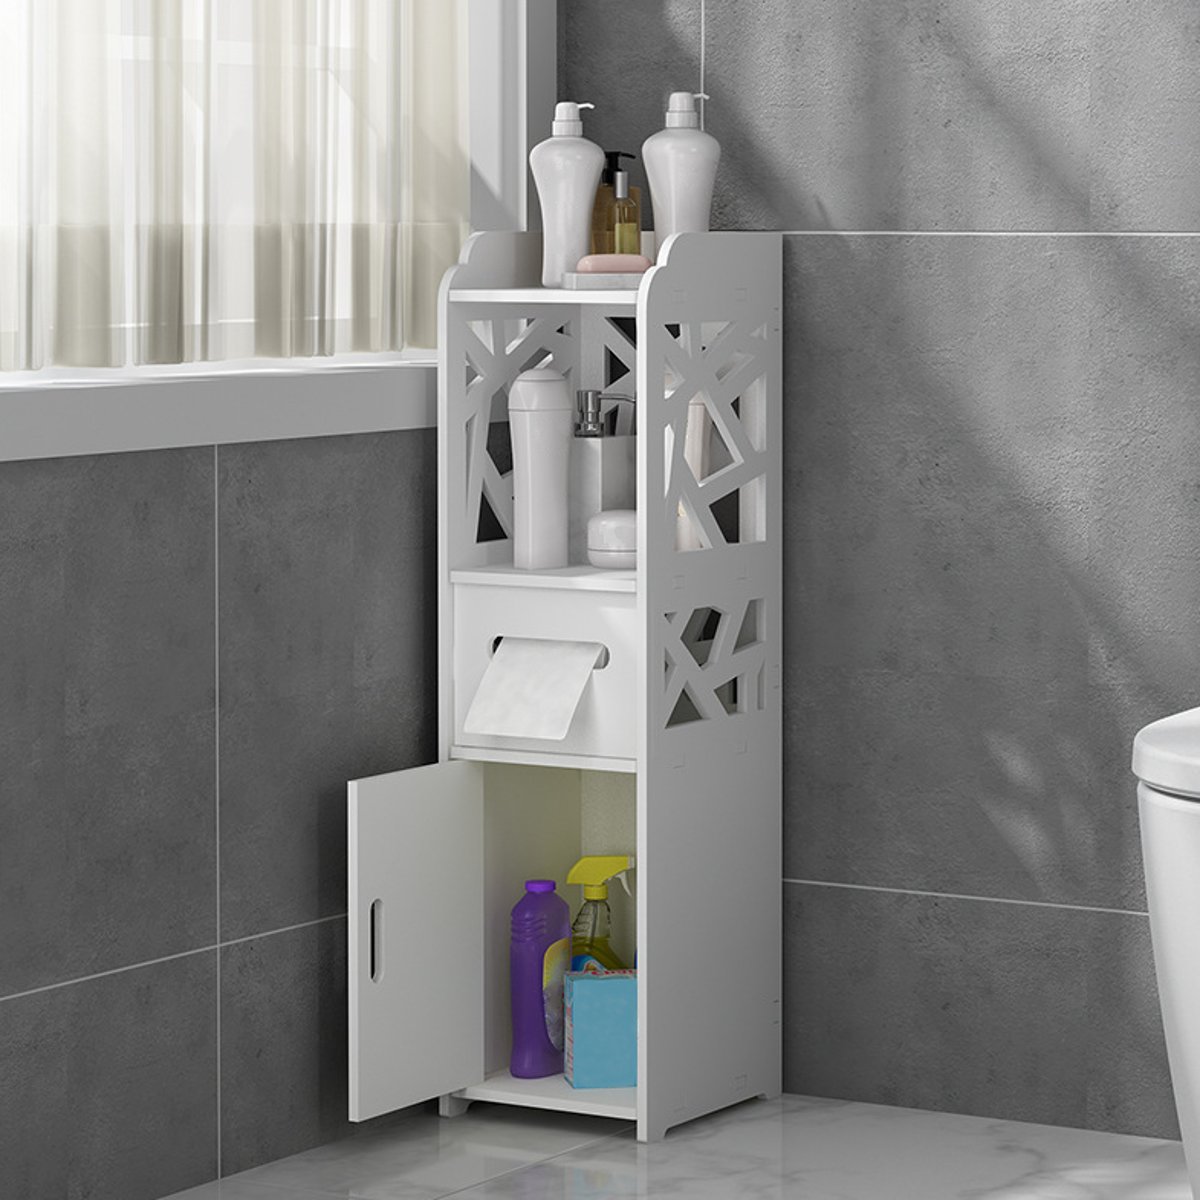 Find 22x24x80cm Bathroom Floor Standing Storage Cabinet Washbasin Shower Corner Shelf for Sale on Gipsybee.com with cryptocurrencies